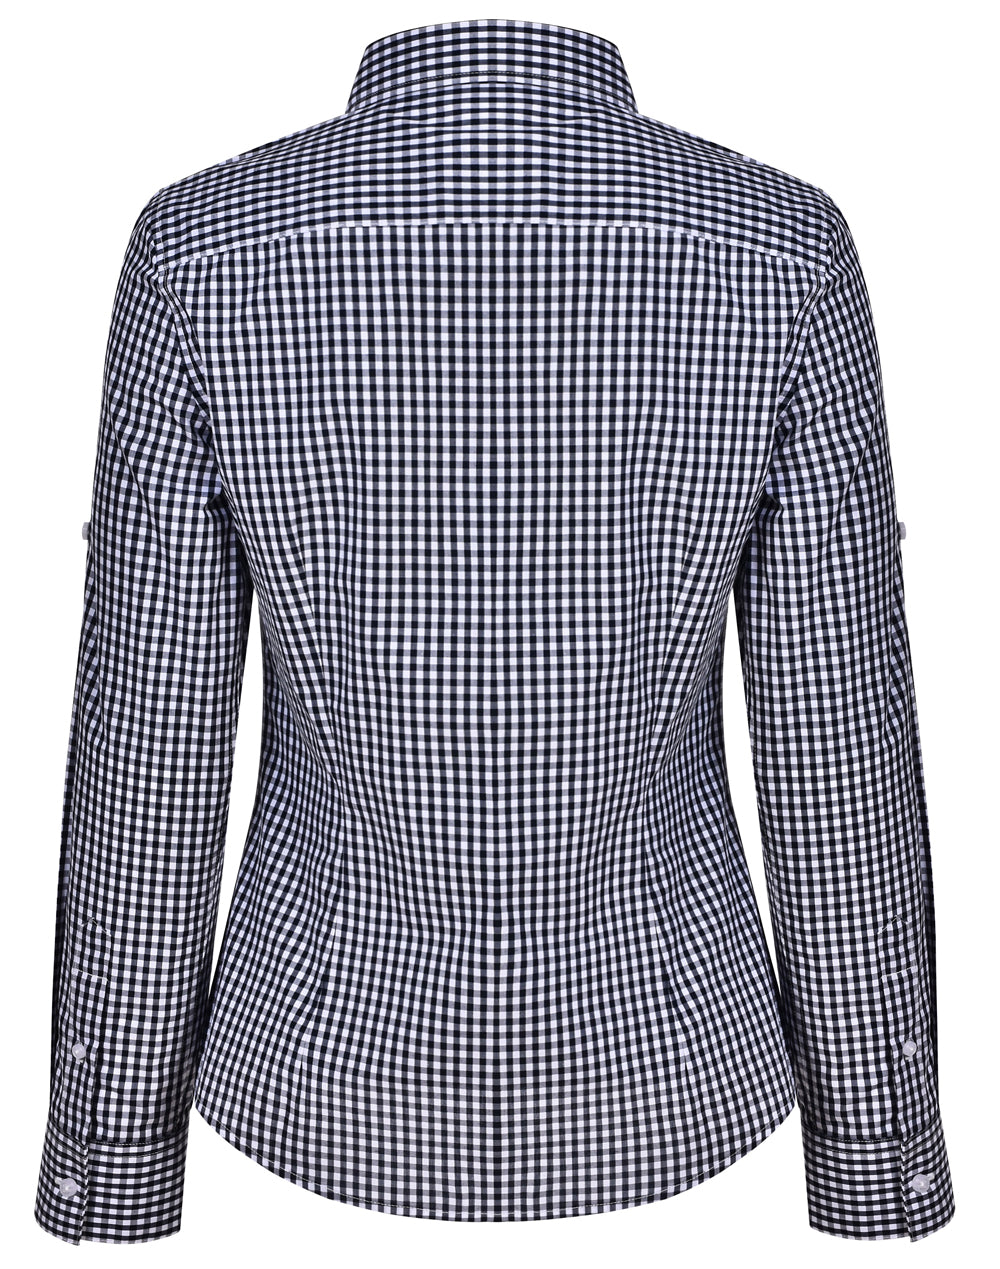 Benchmark M8300L Ladies' Gingham Check Long Sleeve Shirt